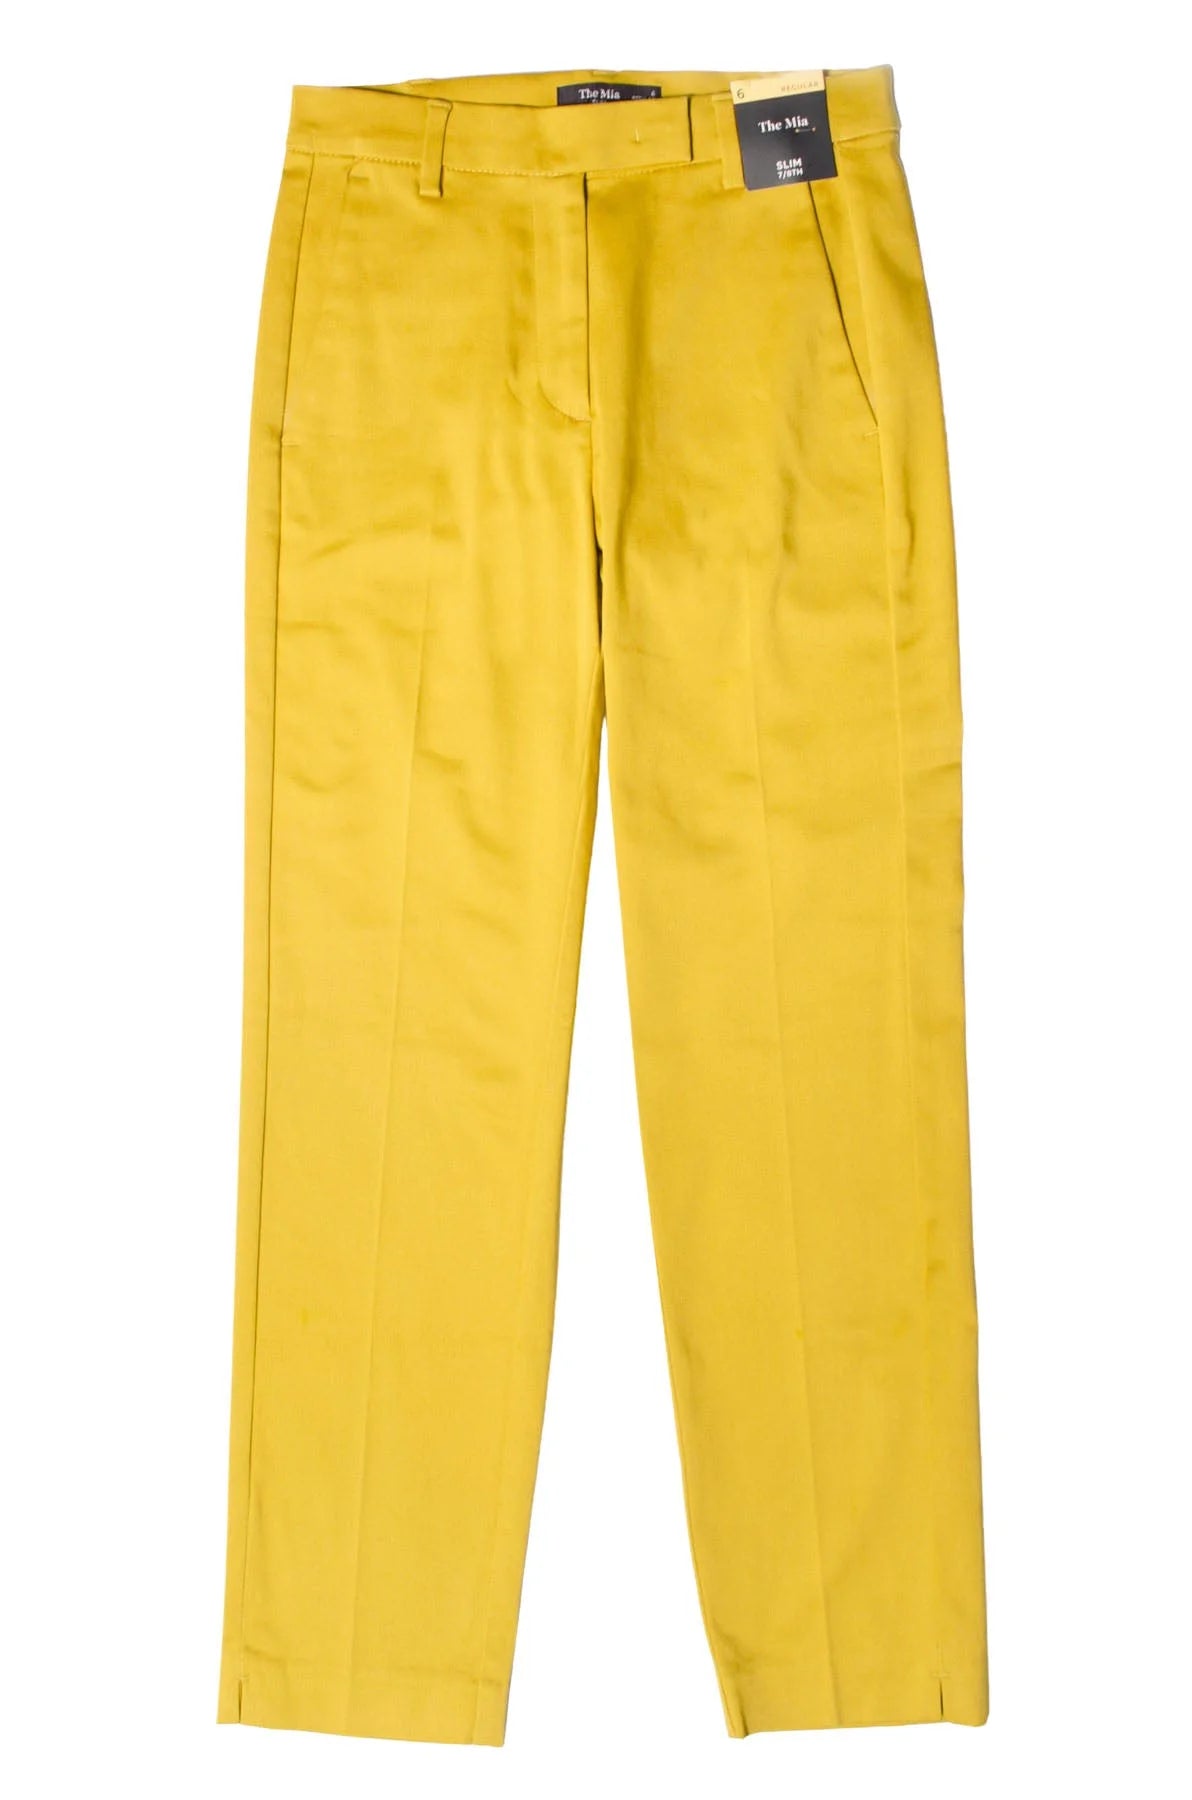 M&S Mia Slim Fit 7/8 Length Trousers Mustard / 22 / Reg